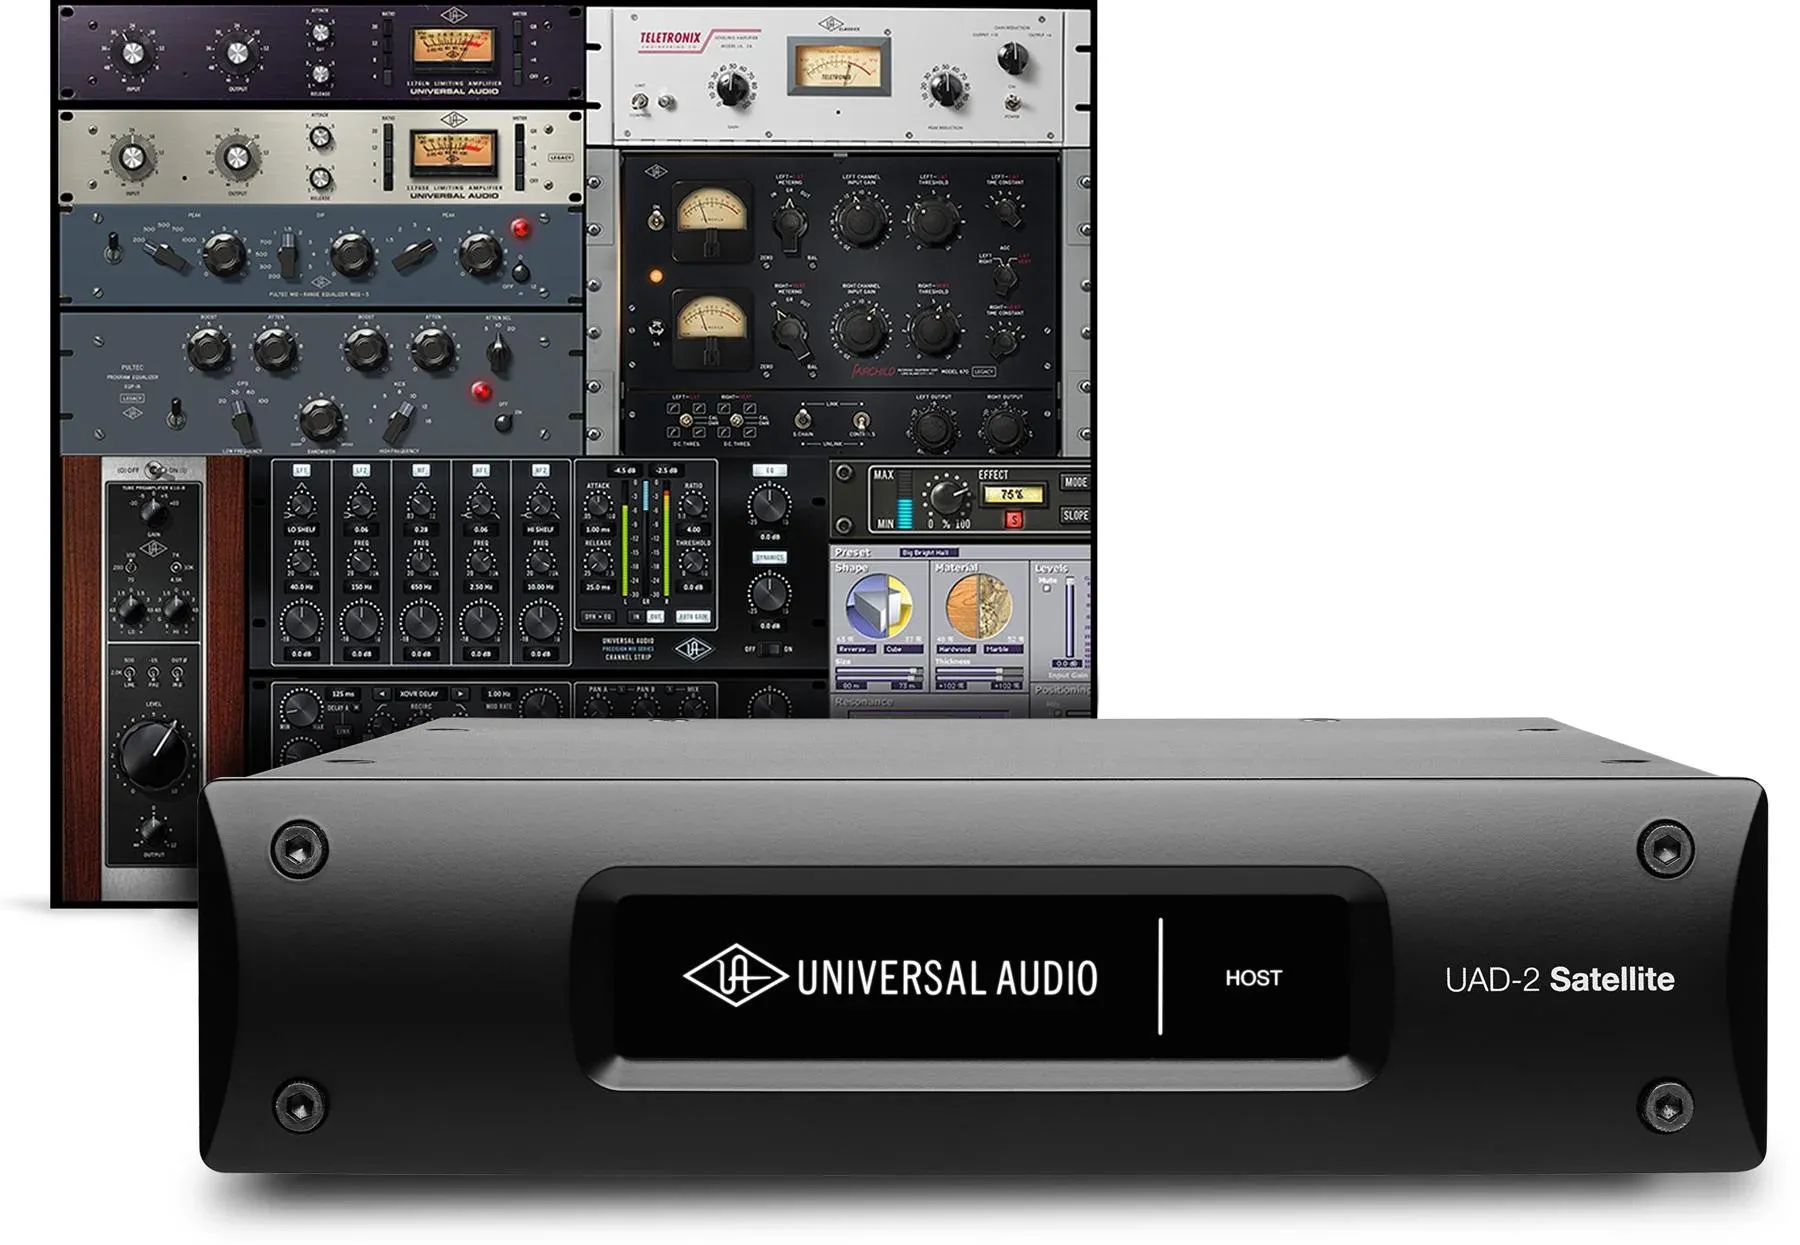 Universal Audio UAD-2 Octo Core. Universal Audio UAD-2 Quad. UAD Satellite Octo. Universal Audio DSP. Uad volt